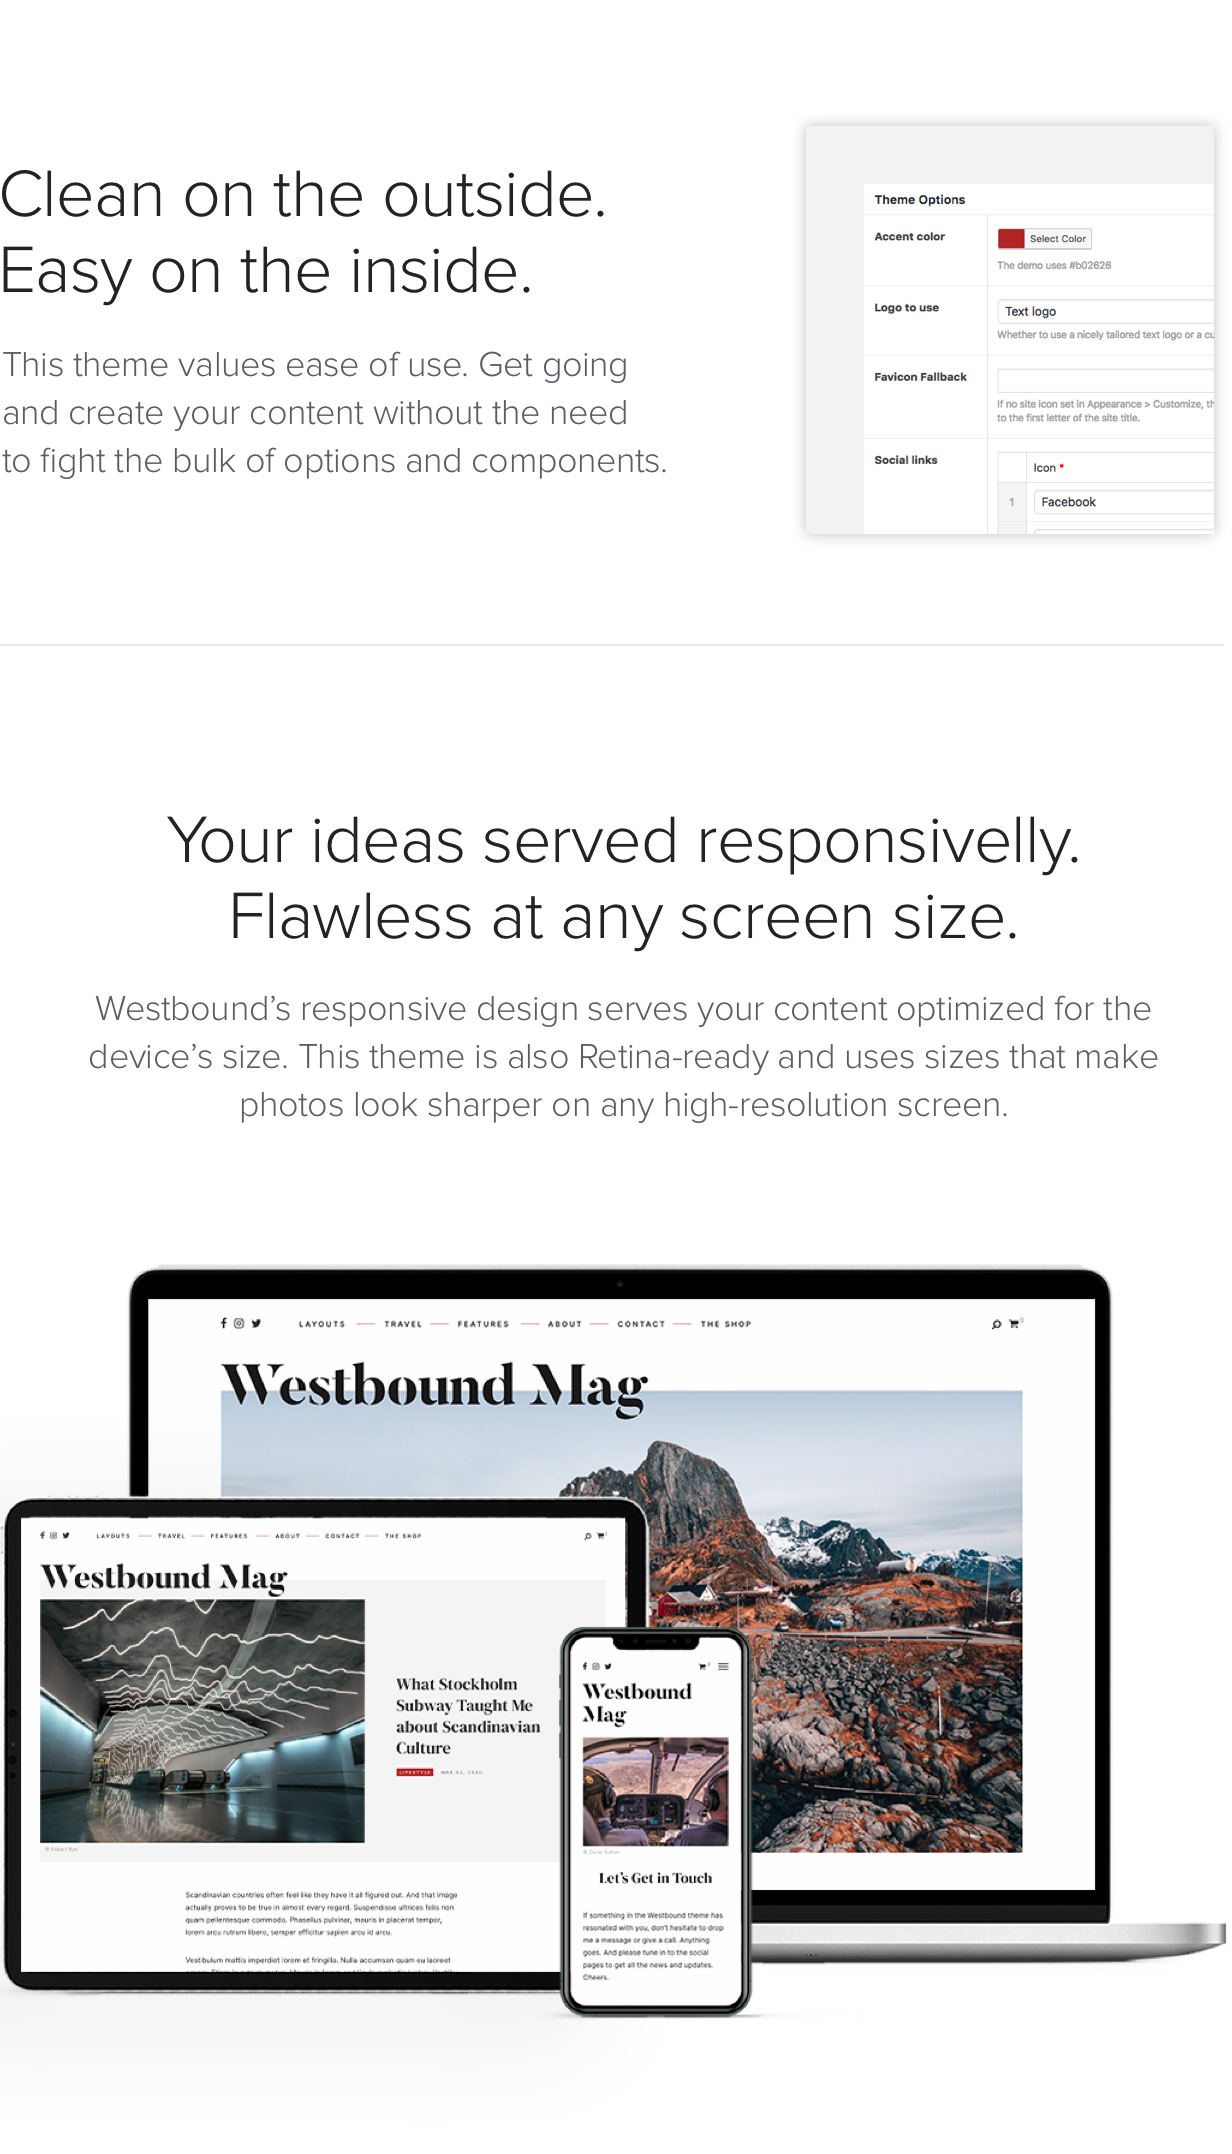 Westbound - Un thème de blog WordPress narratif - 3